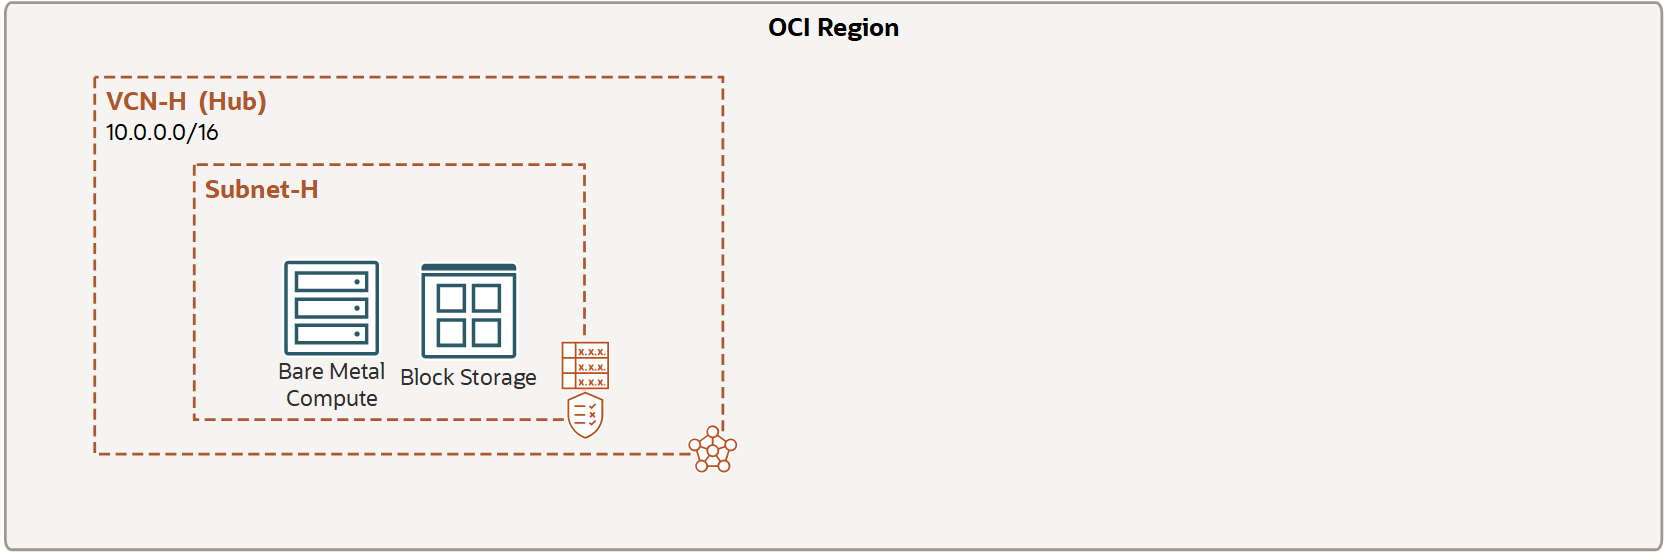 En esta imagen se muestra la tarea 1: configurar la VCN de hub.